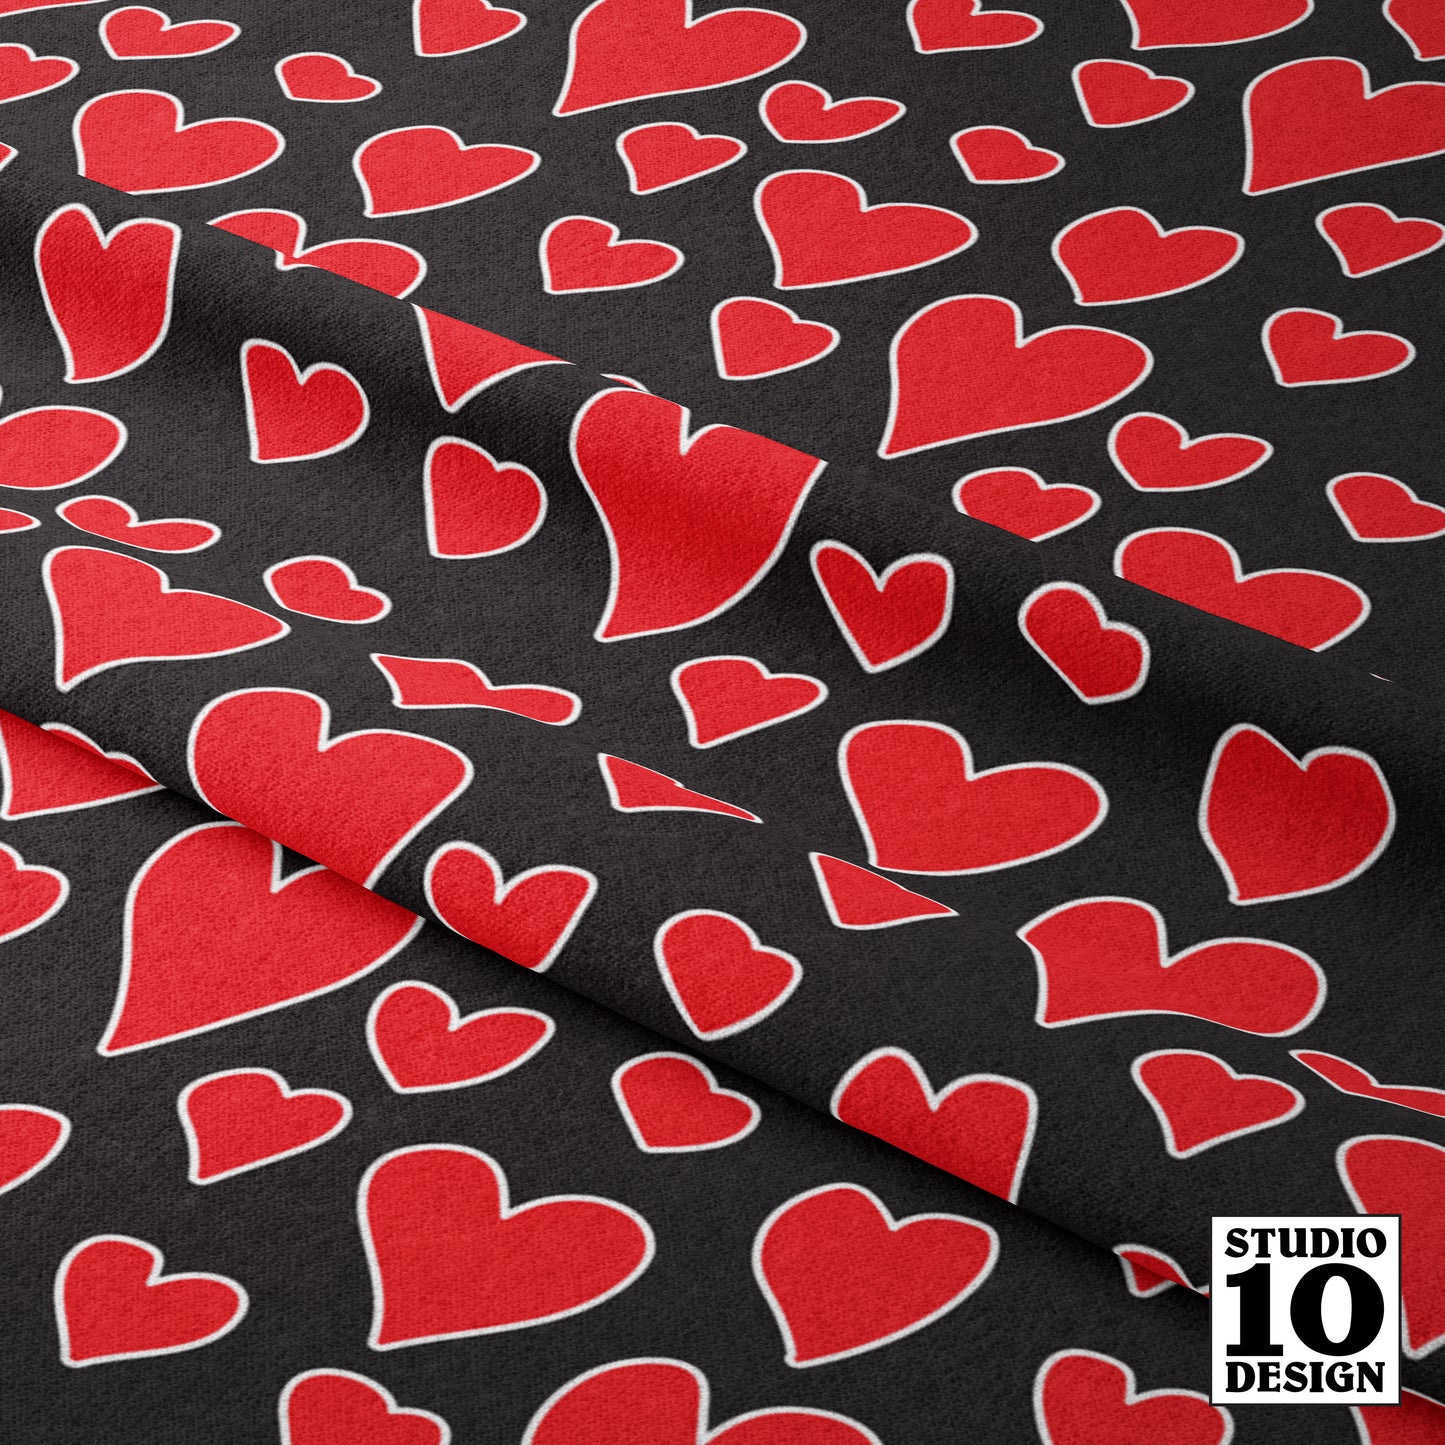 Rainbow Hearts Red+Black Printed Fabric by Studio Ten Design